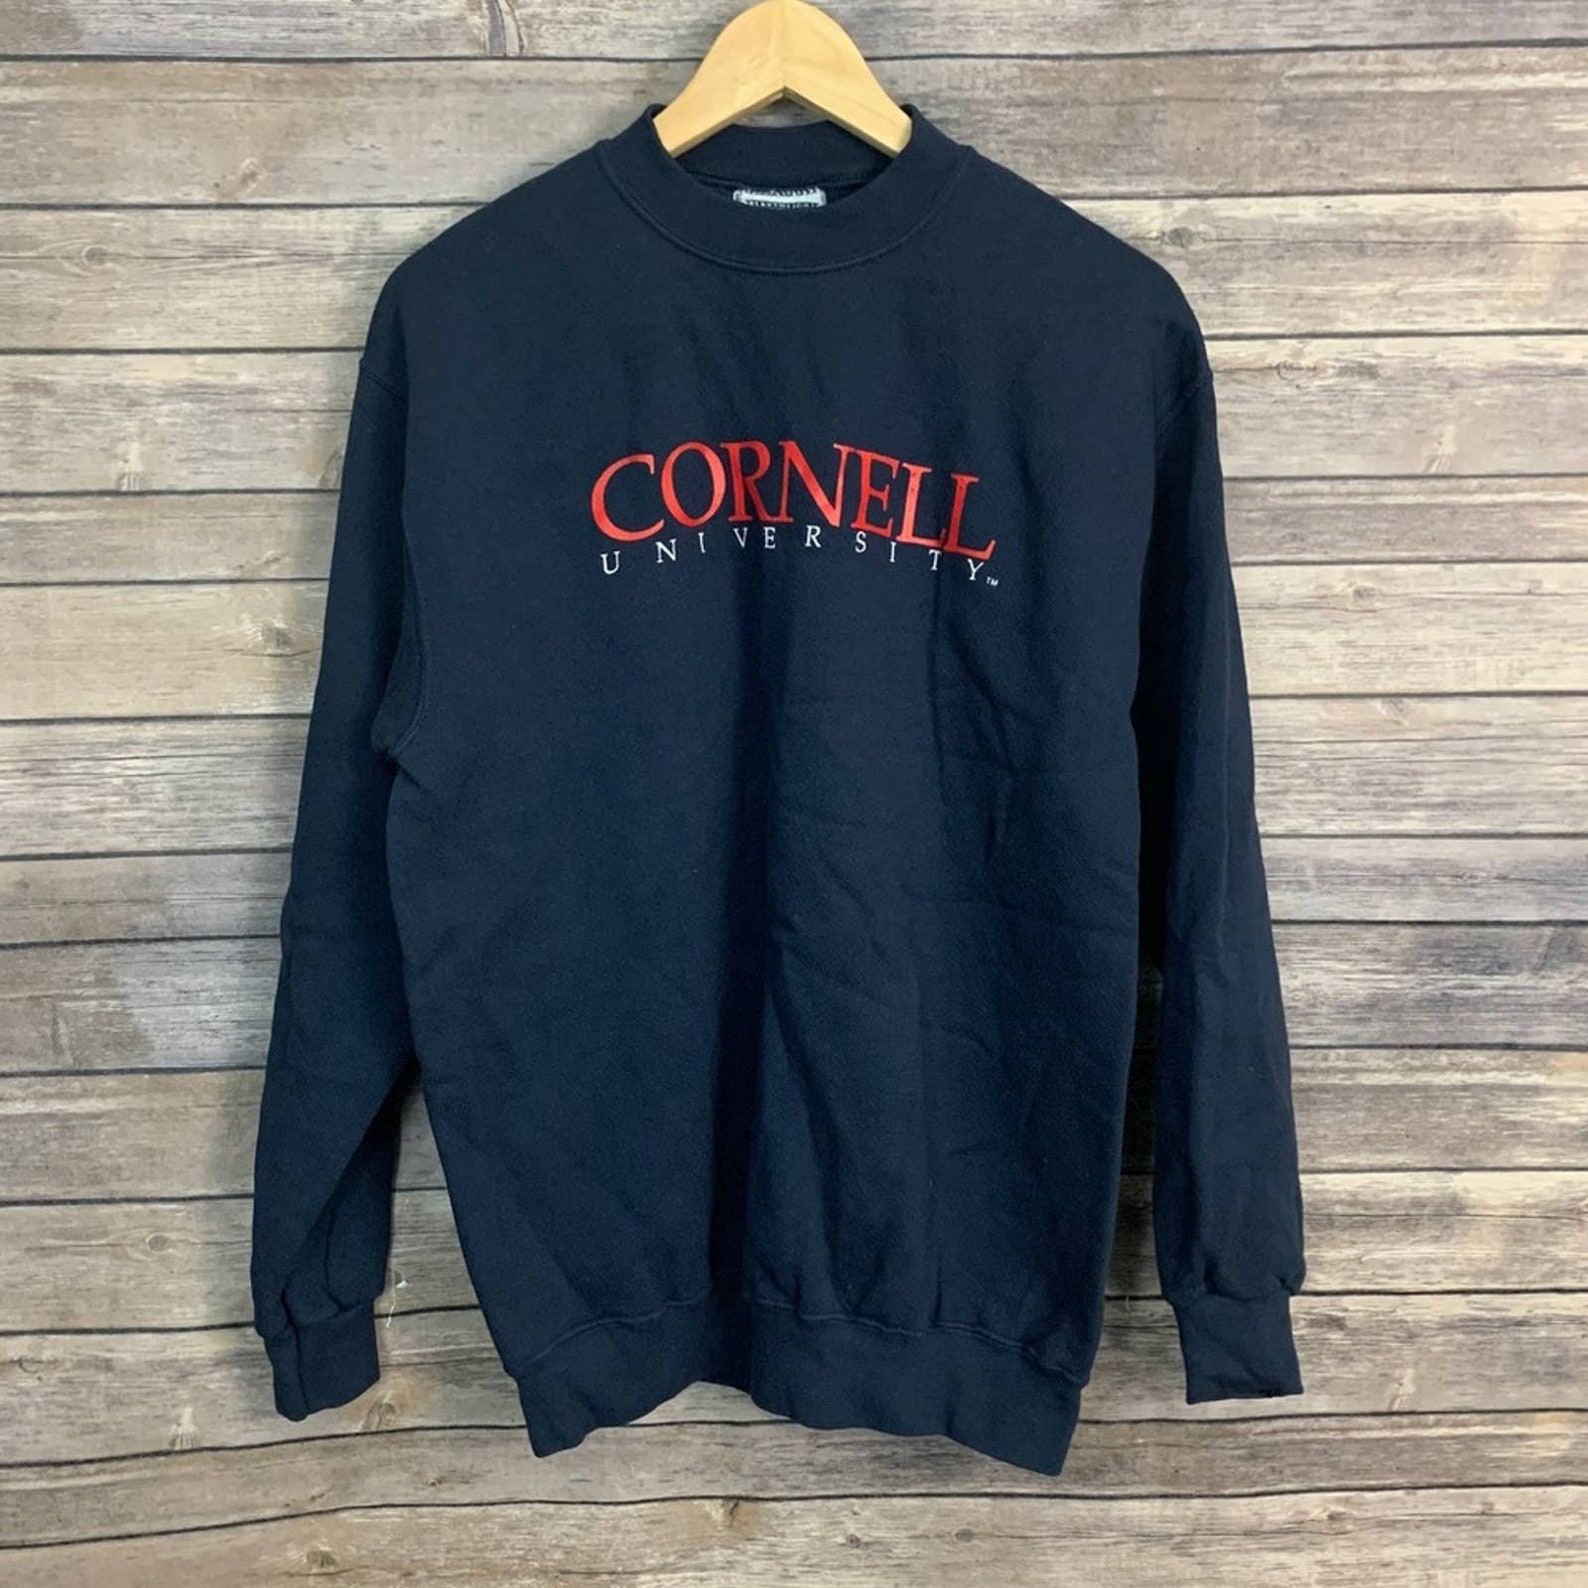 Vintage Cornell University Navy Blue Sweatshirt | Etsy